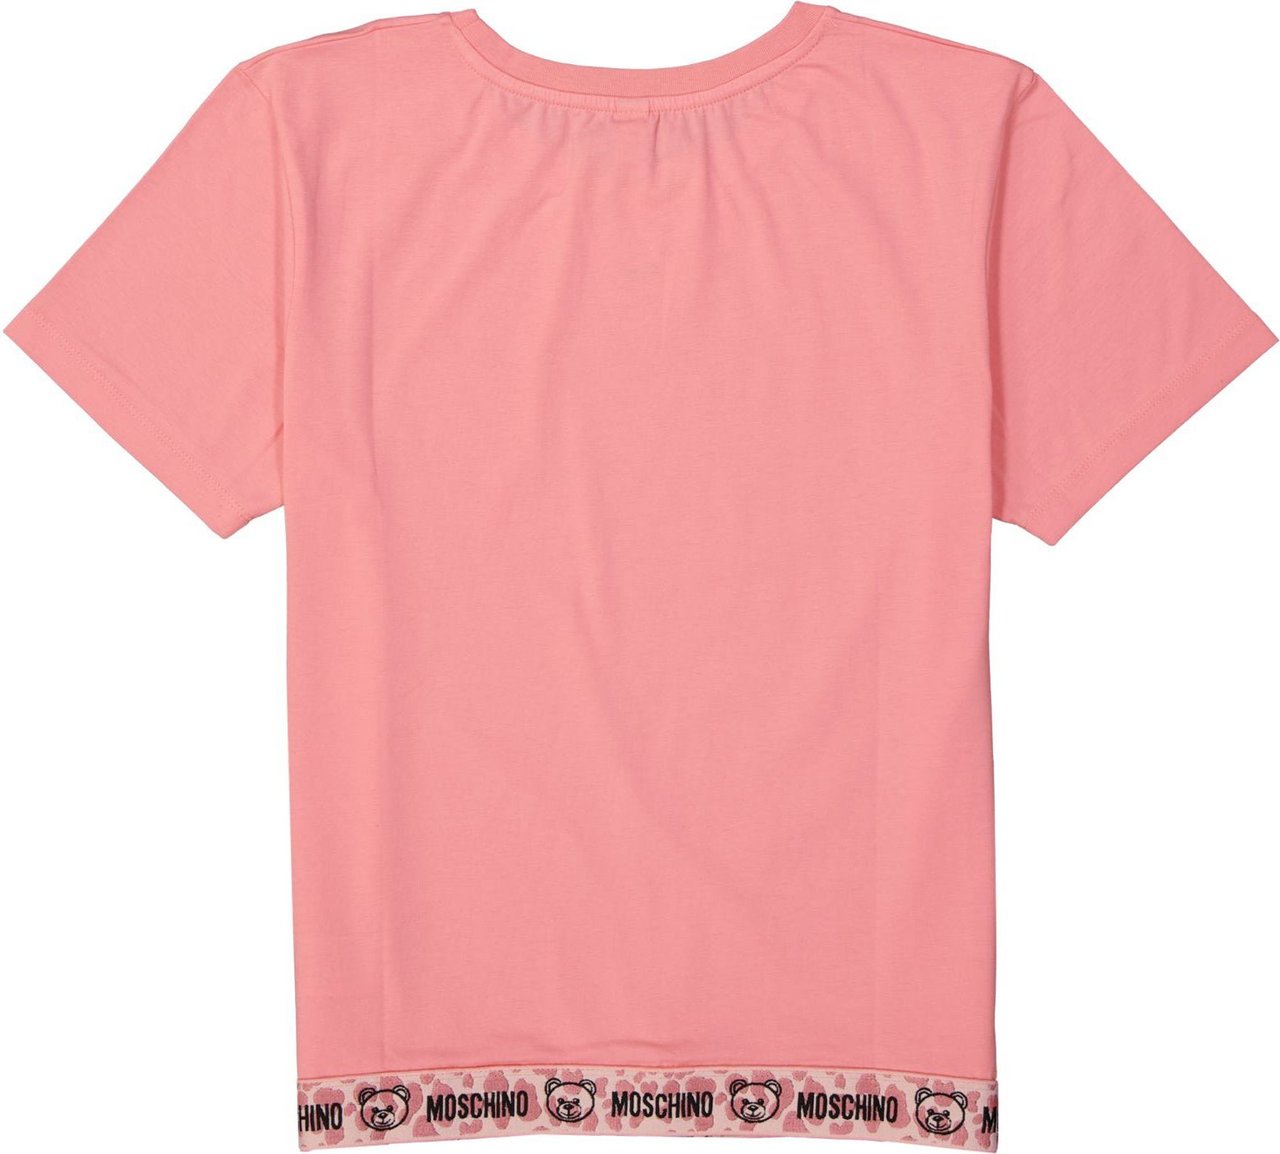 Moschino Moschino Underwear Cotton T-Shirt Roze